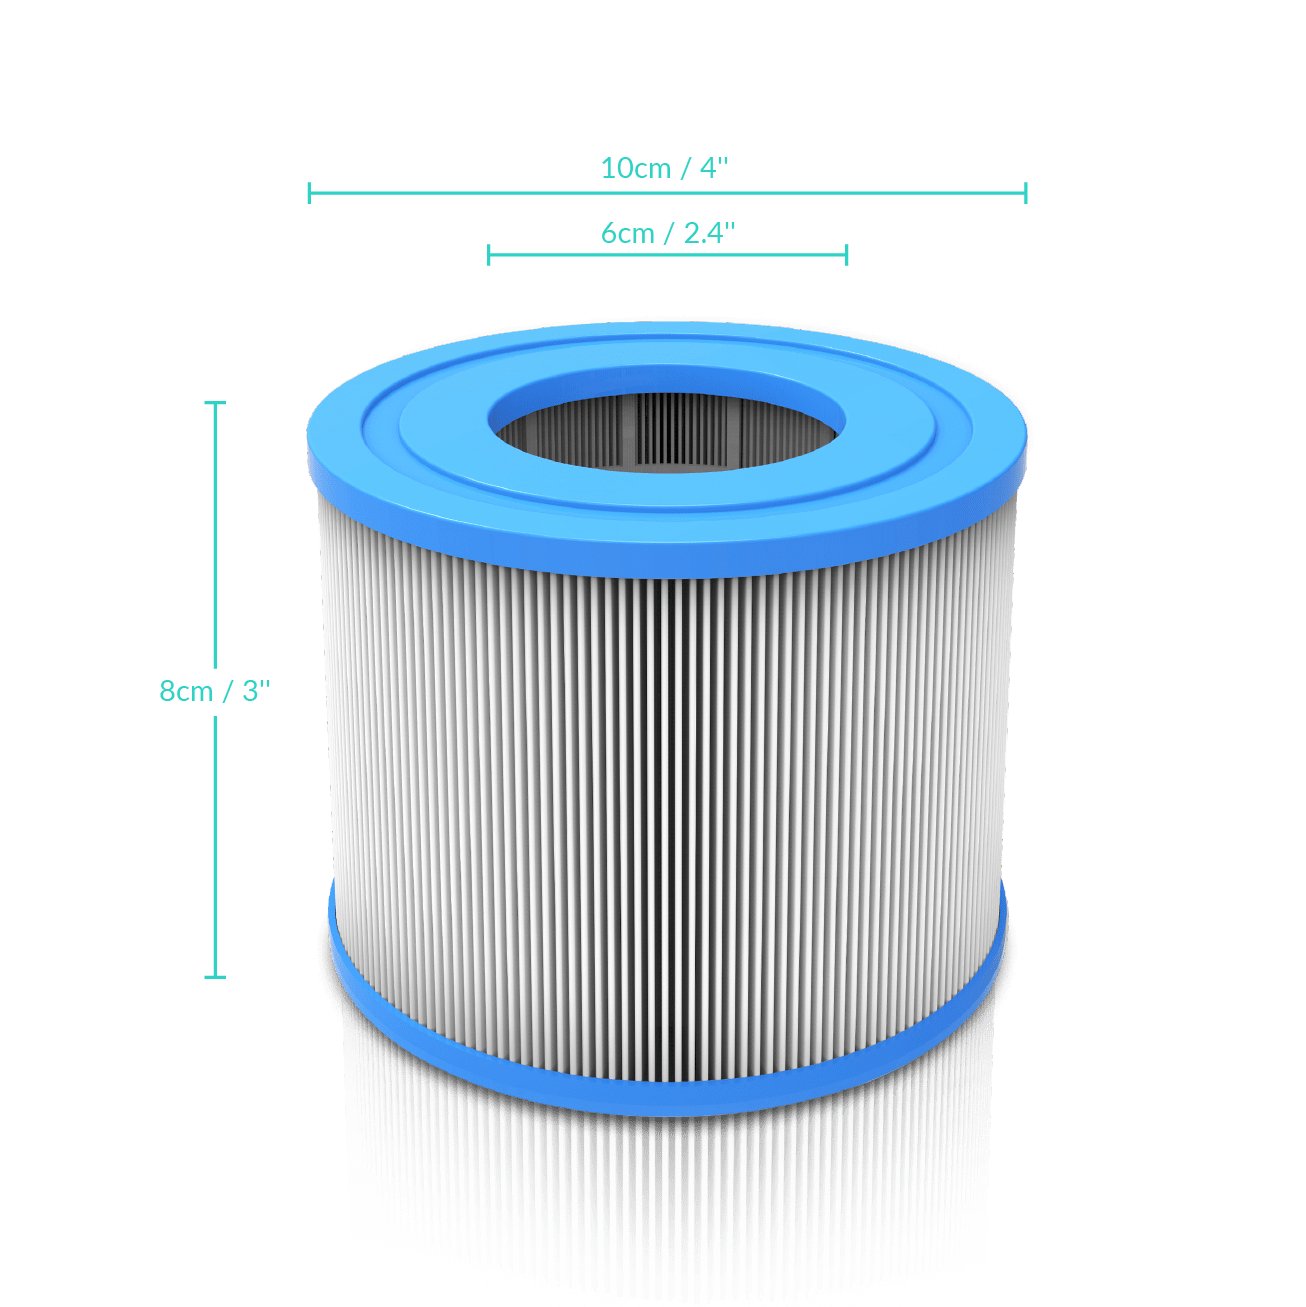 Hot Tub Replacement Filter Cartridge | 2020 Onwards | 4 Pack - Wave Spas Europe